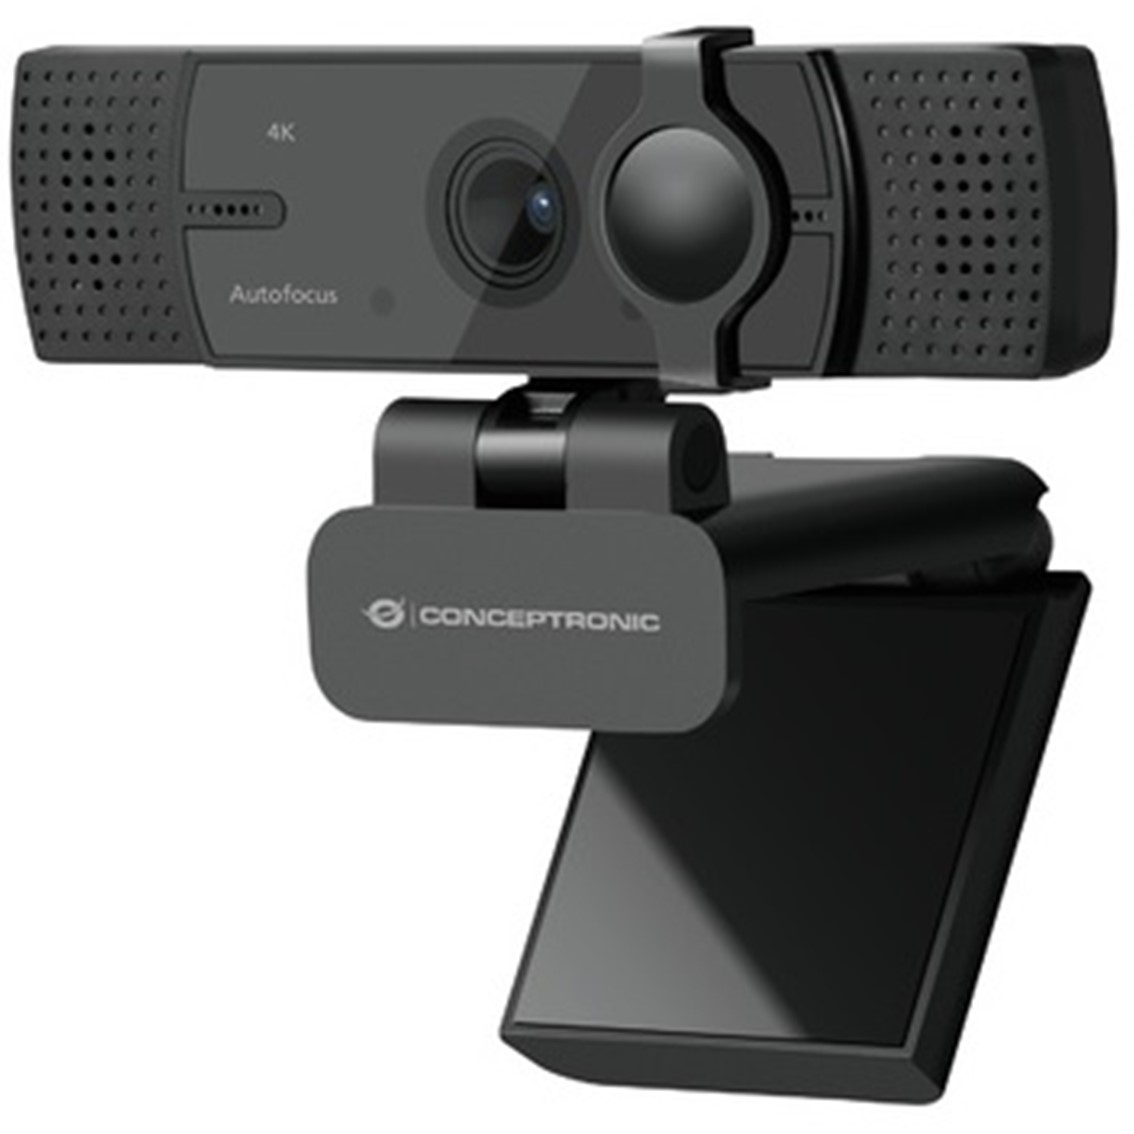 Webcam 4k conceptronic amdis07b 8.3mp -  4k ultra hd - usb - angulo vision 80º - enfoque automatico - doble microfono integrado